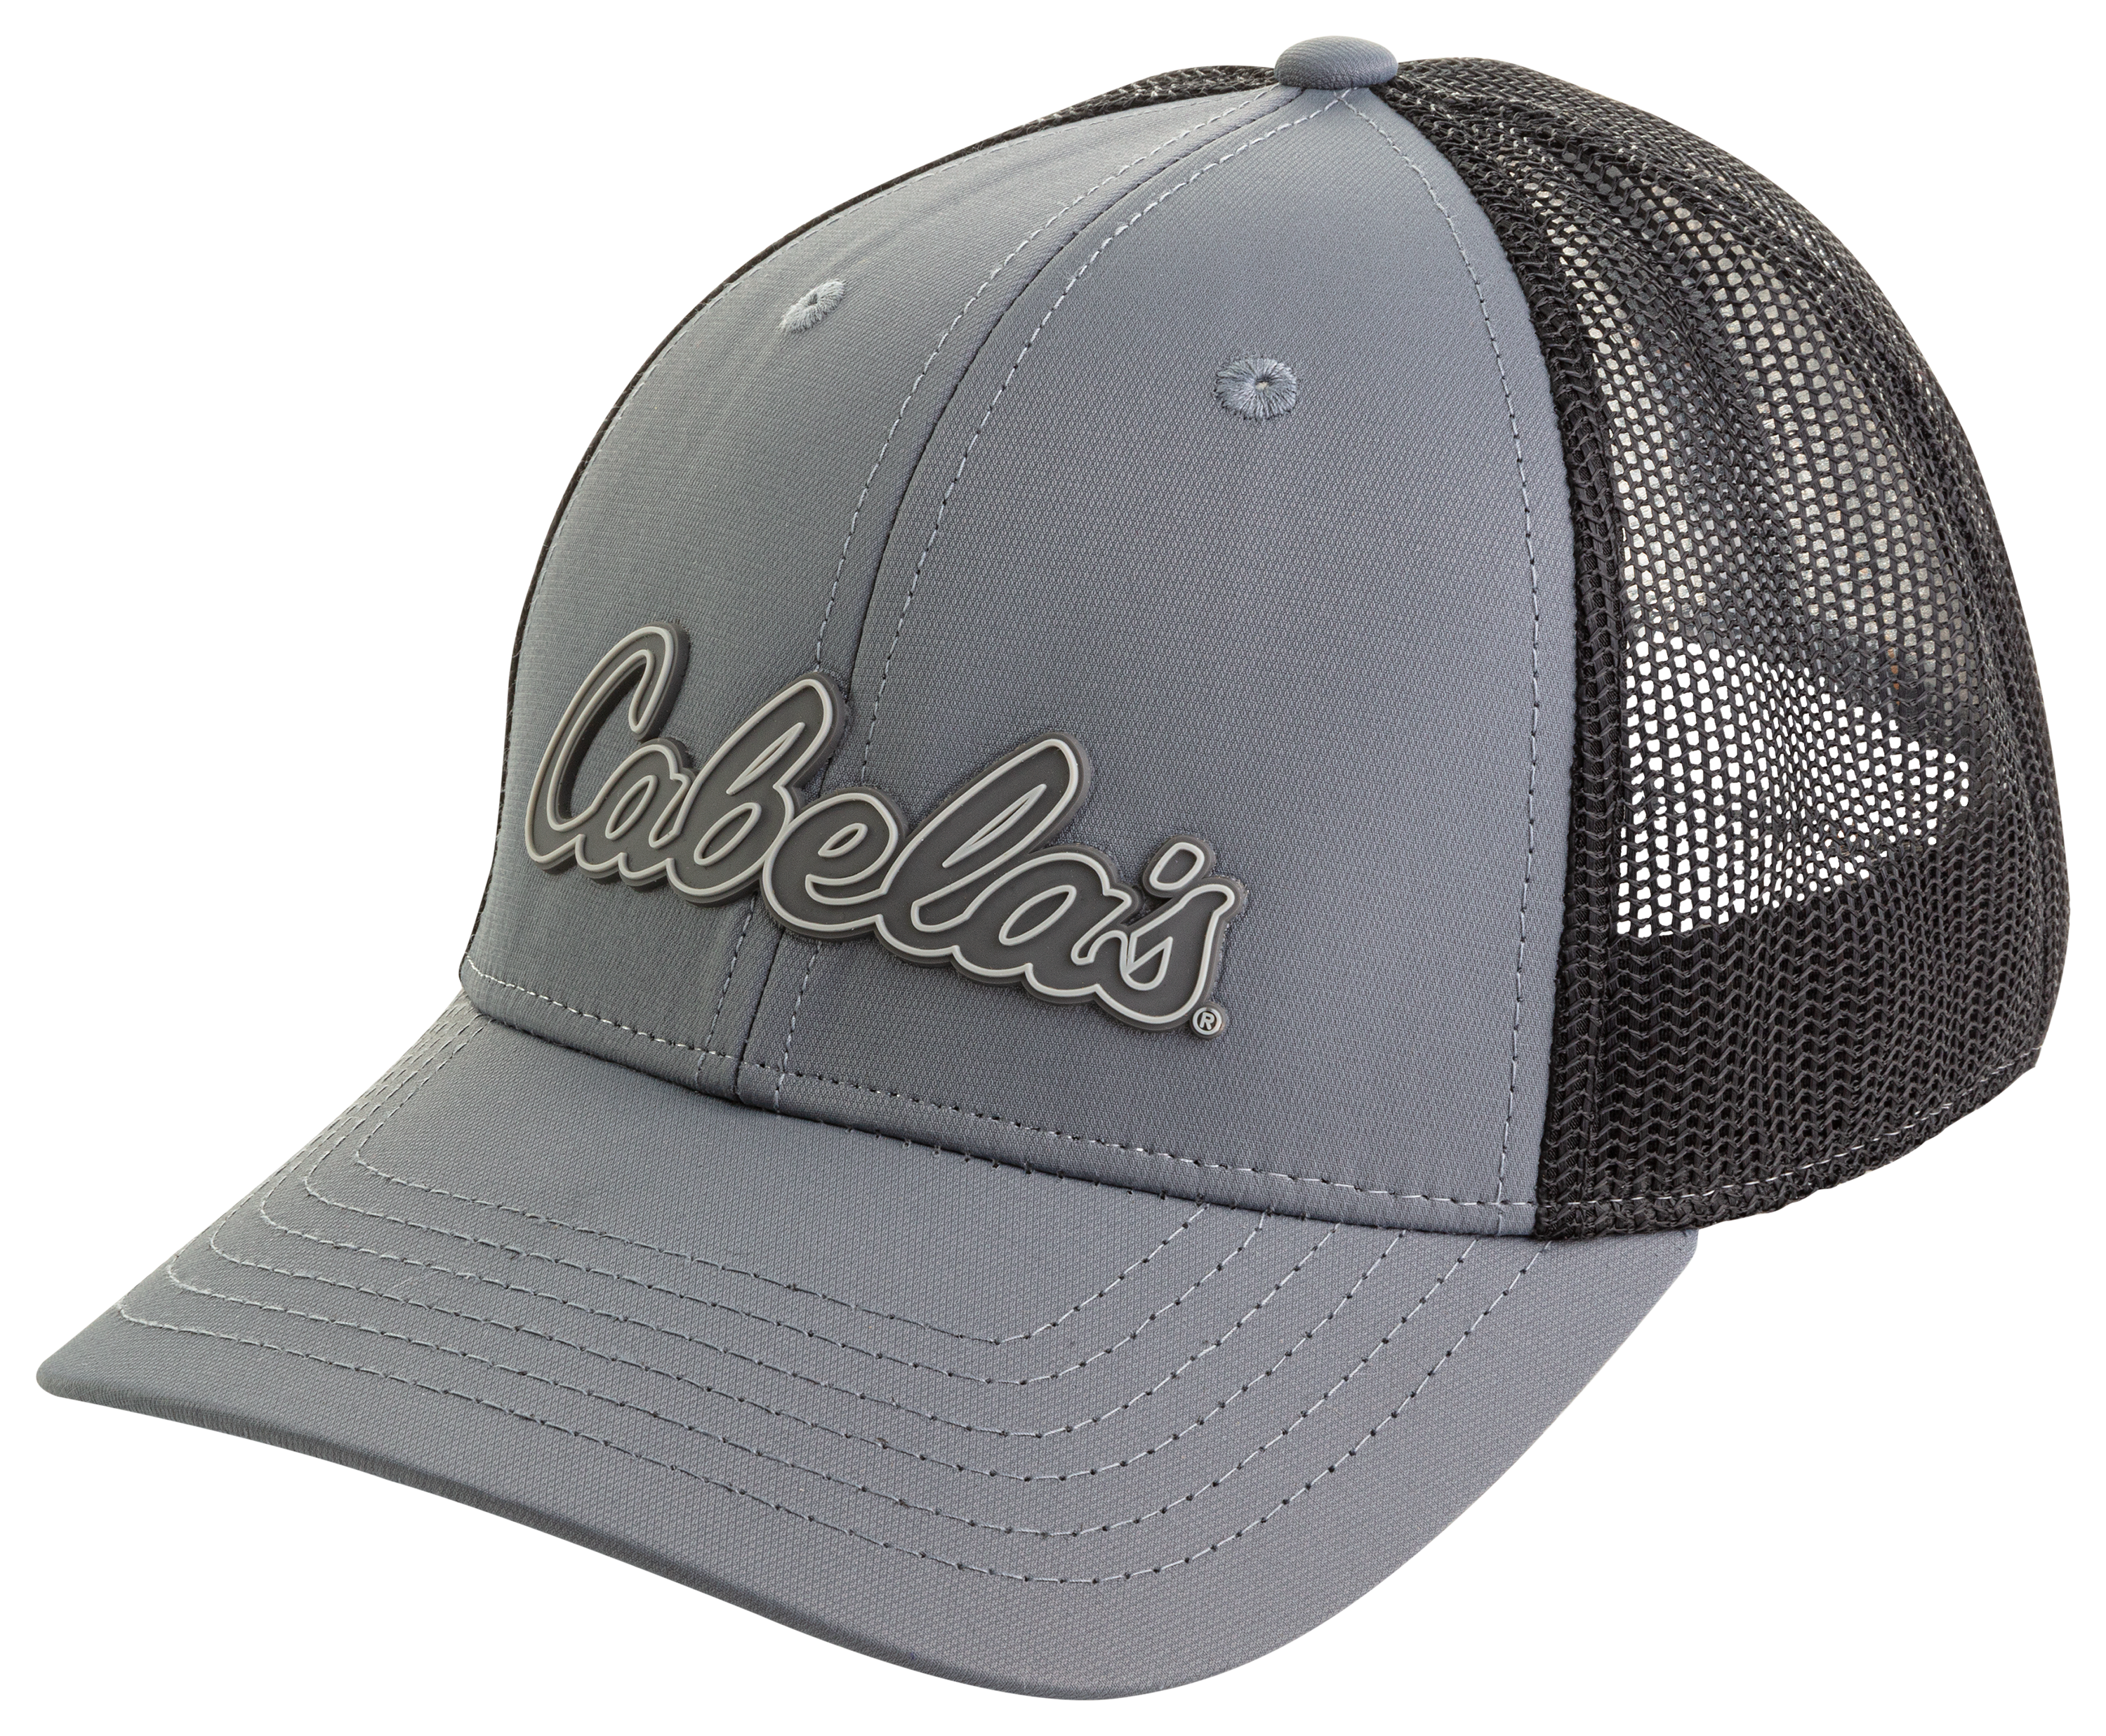 Cabela's Flex-Fit Mesh-Back Cap